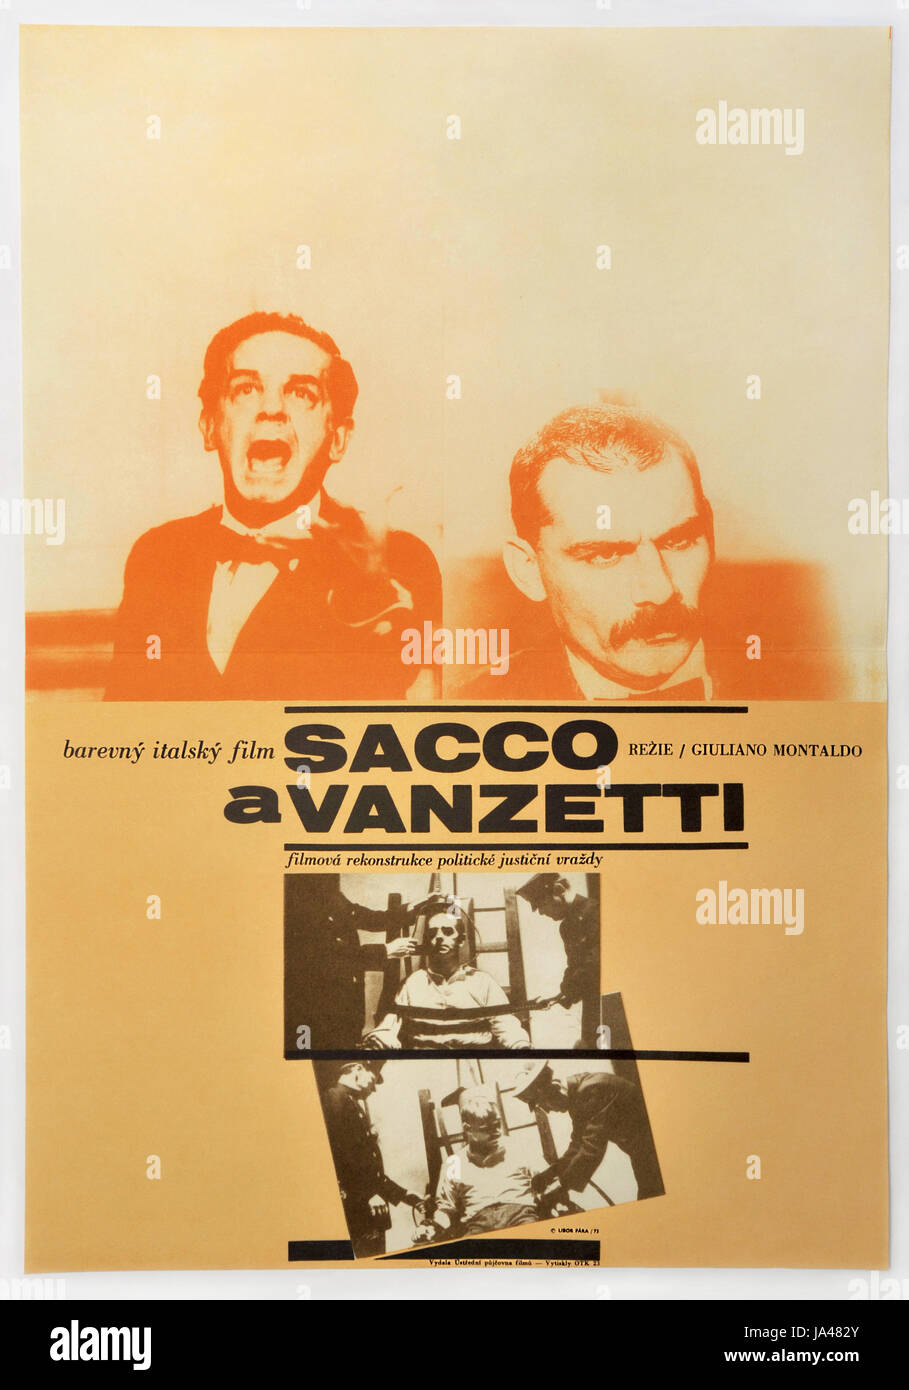 Sacco and Vanzetti. Original Czechoslovak movie poster for Italian drama with Gian Maria Volonte. 1971. Stock Photo